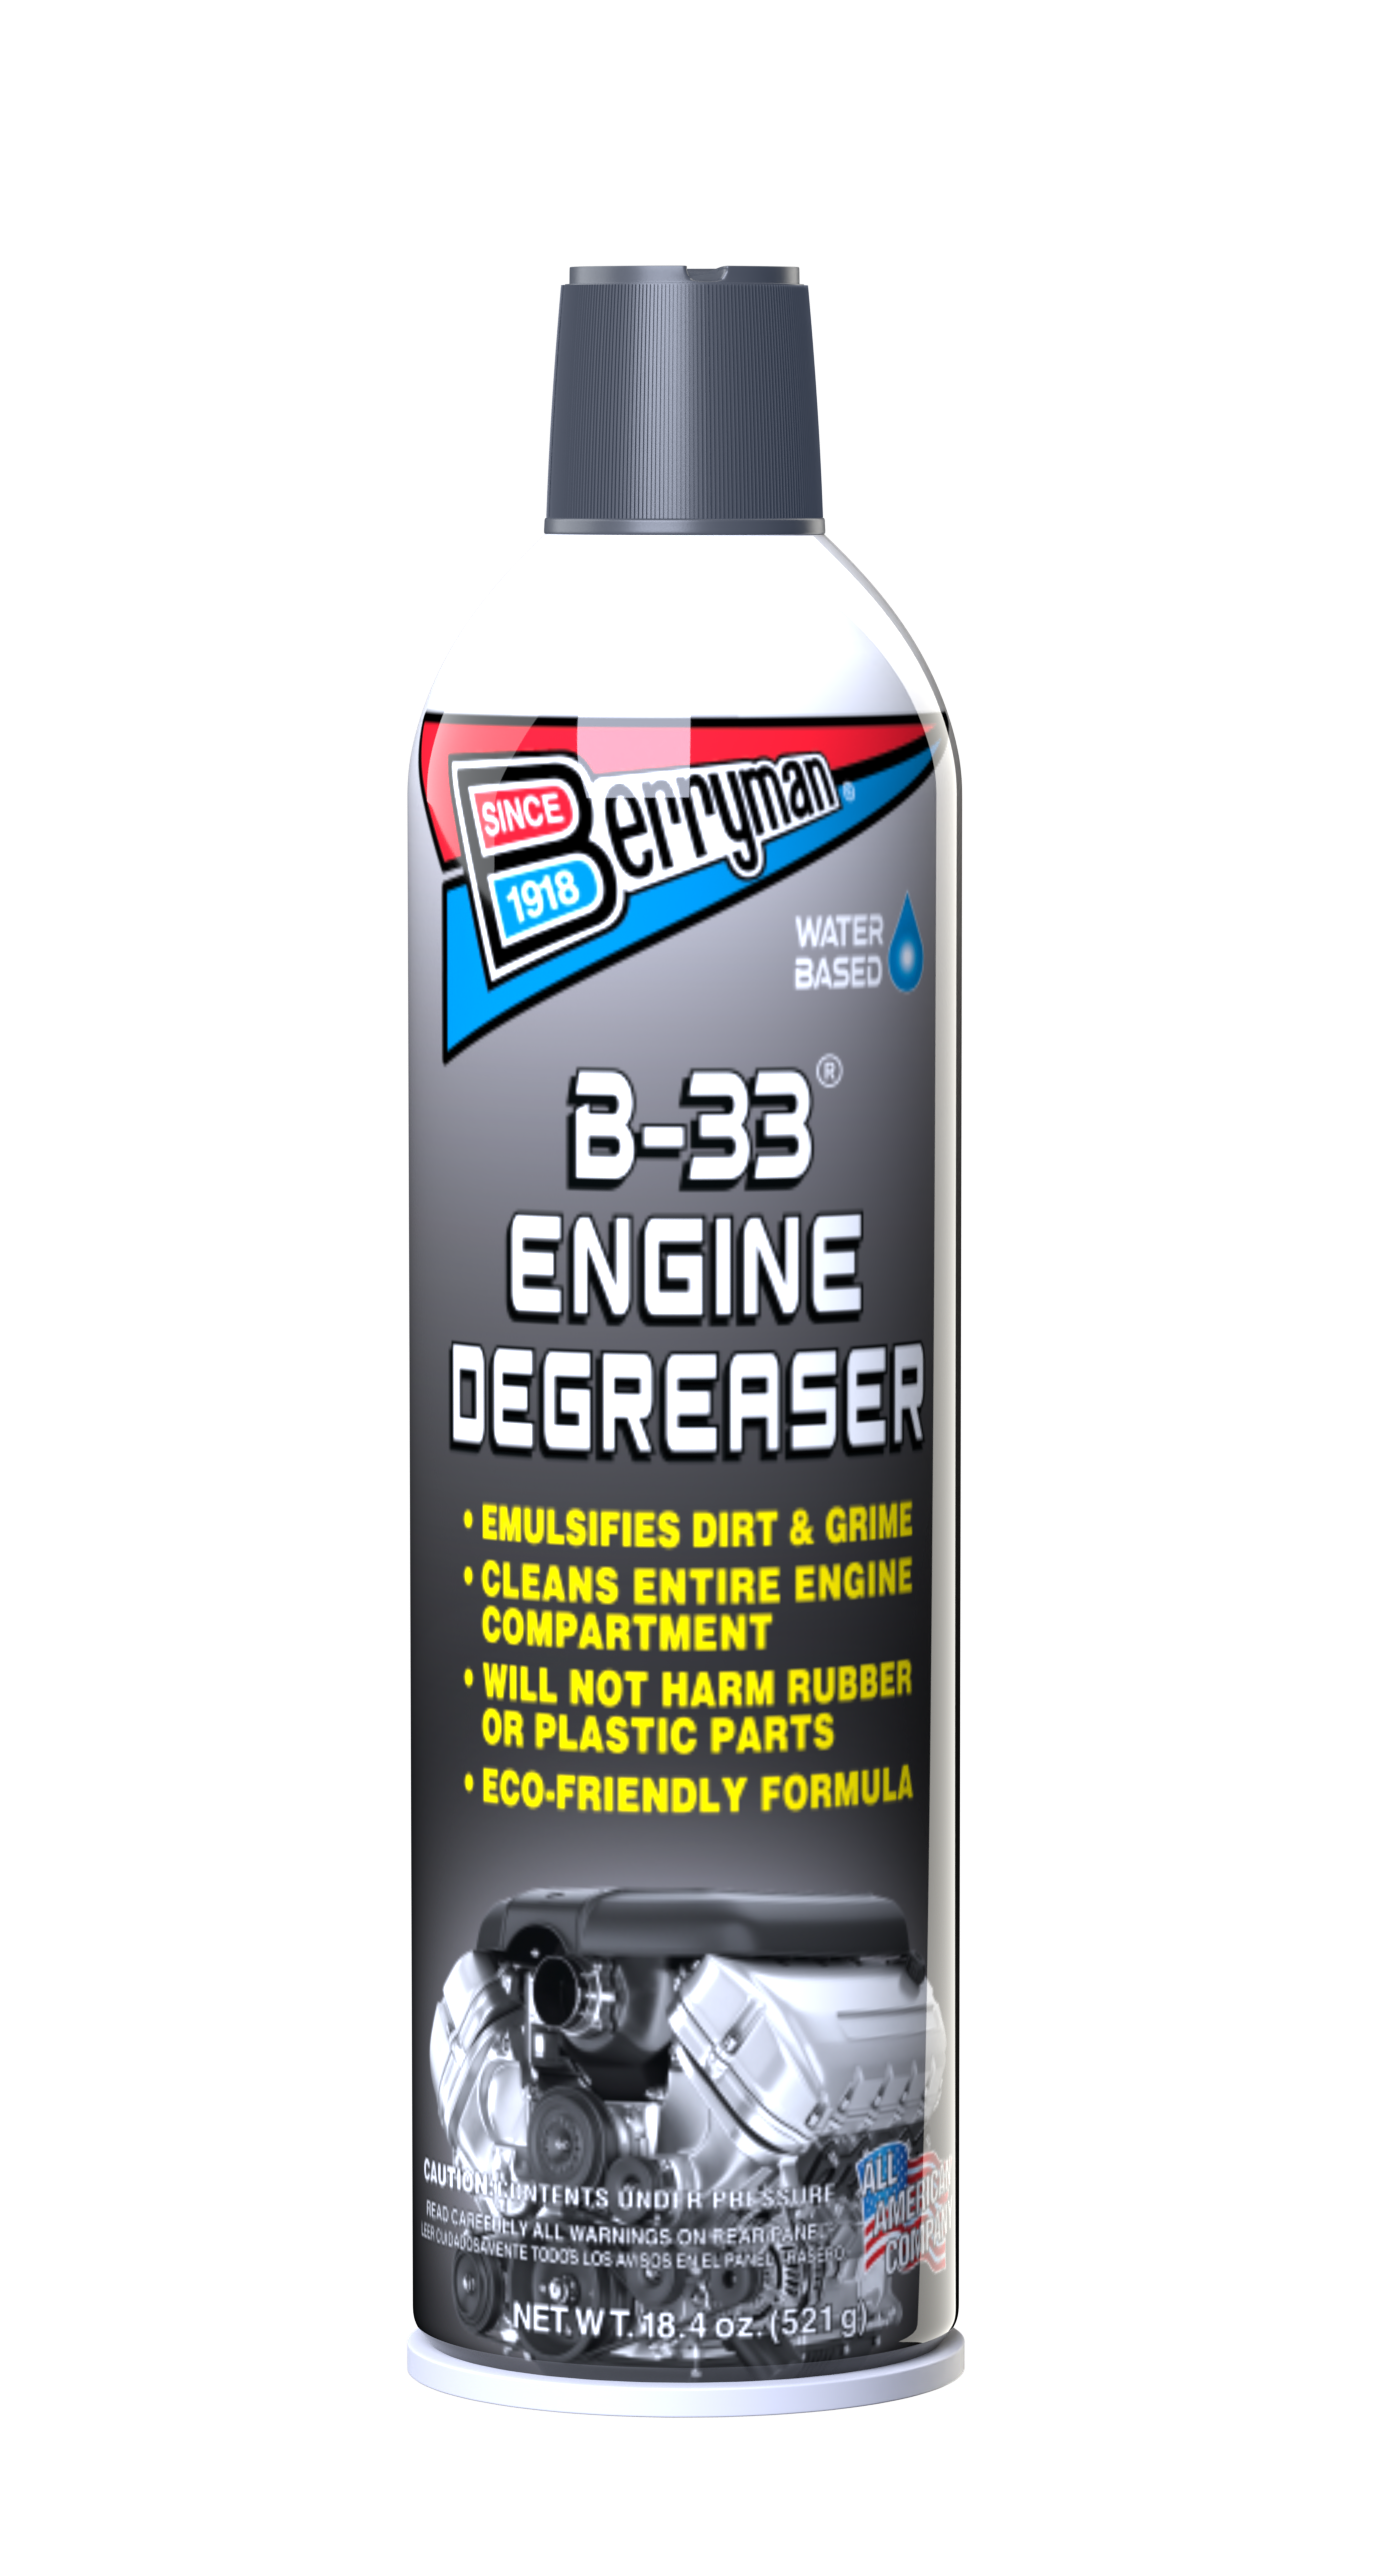 Berryman® B-33 Engine Degreaser